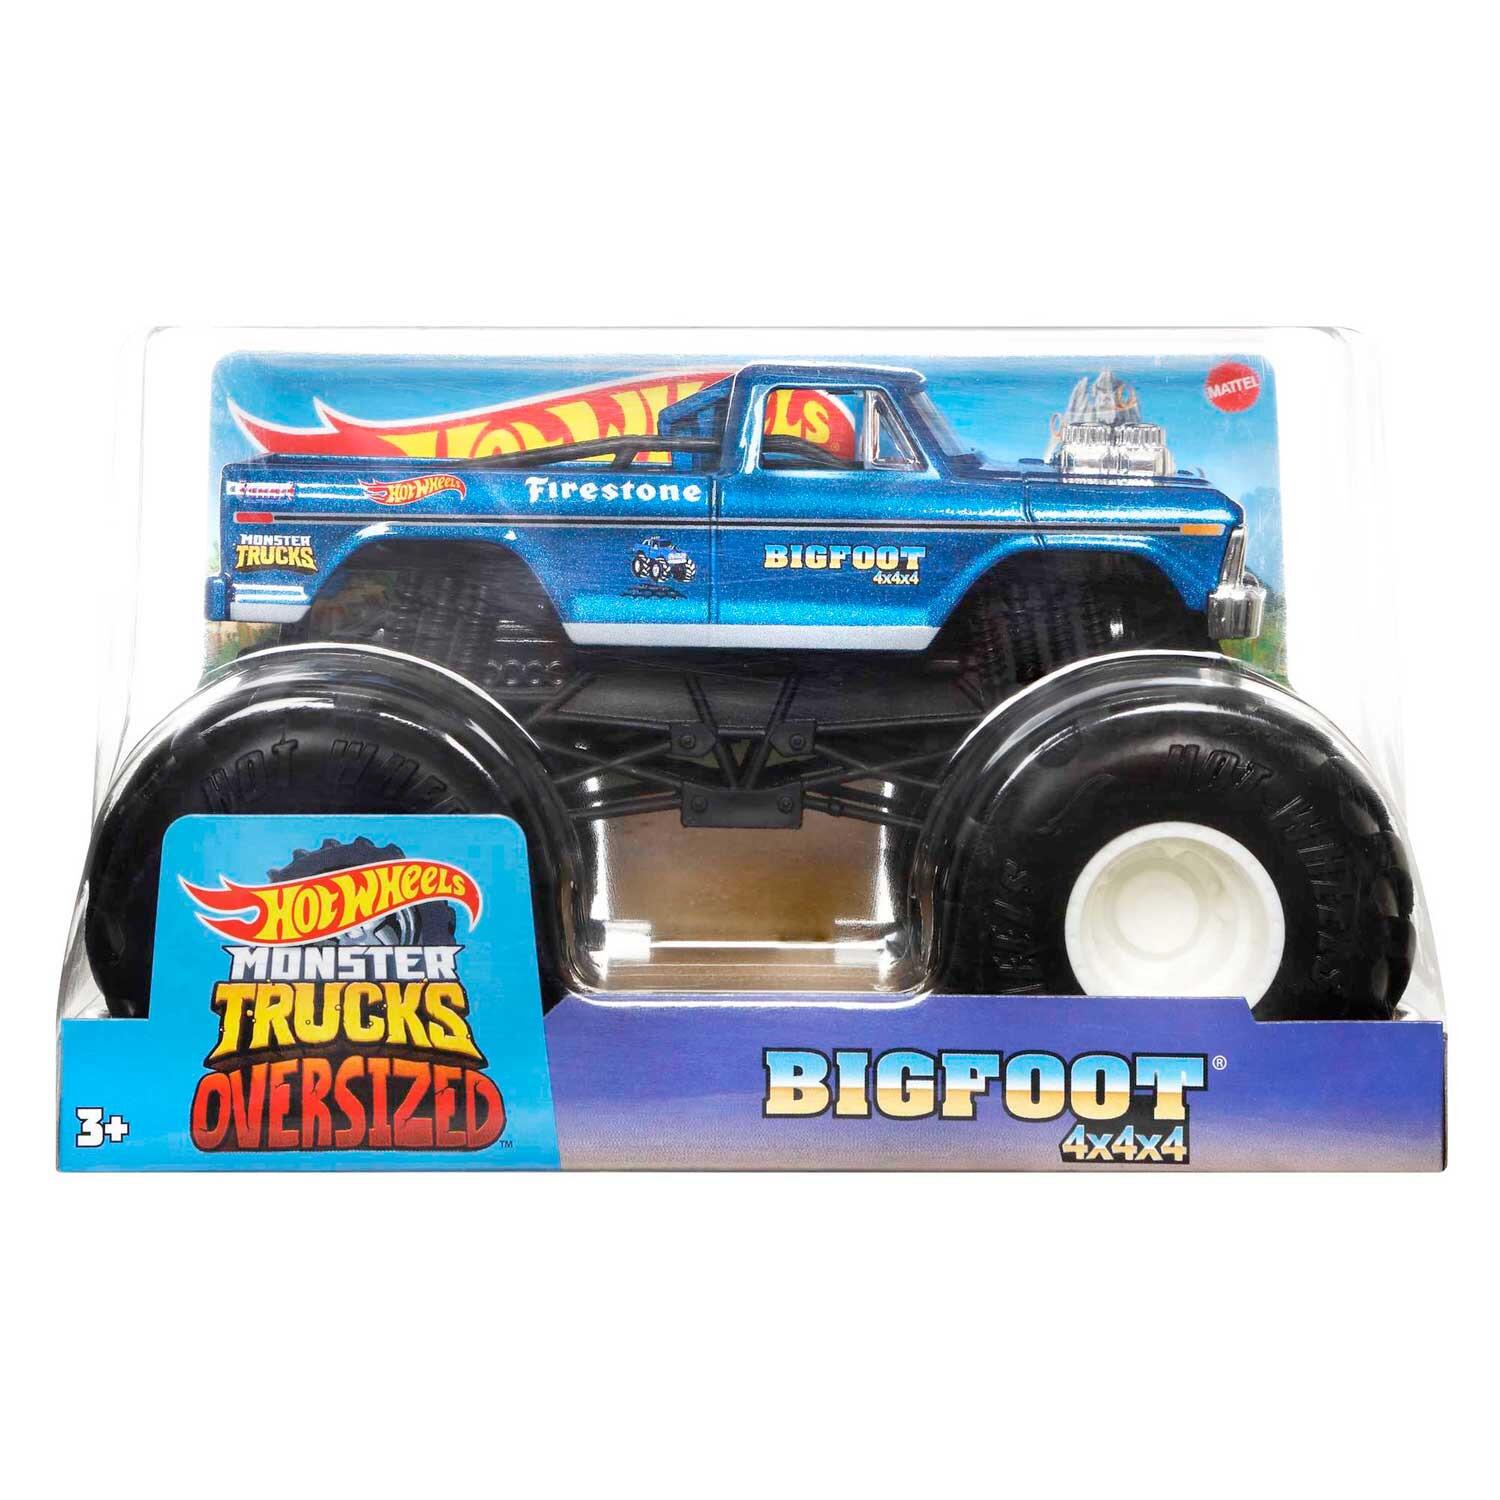 Hot Wheels Big Foot 4x4 Monster Truck in box